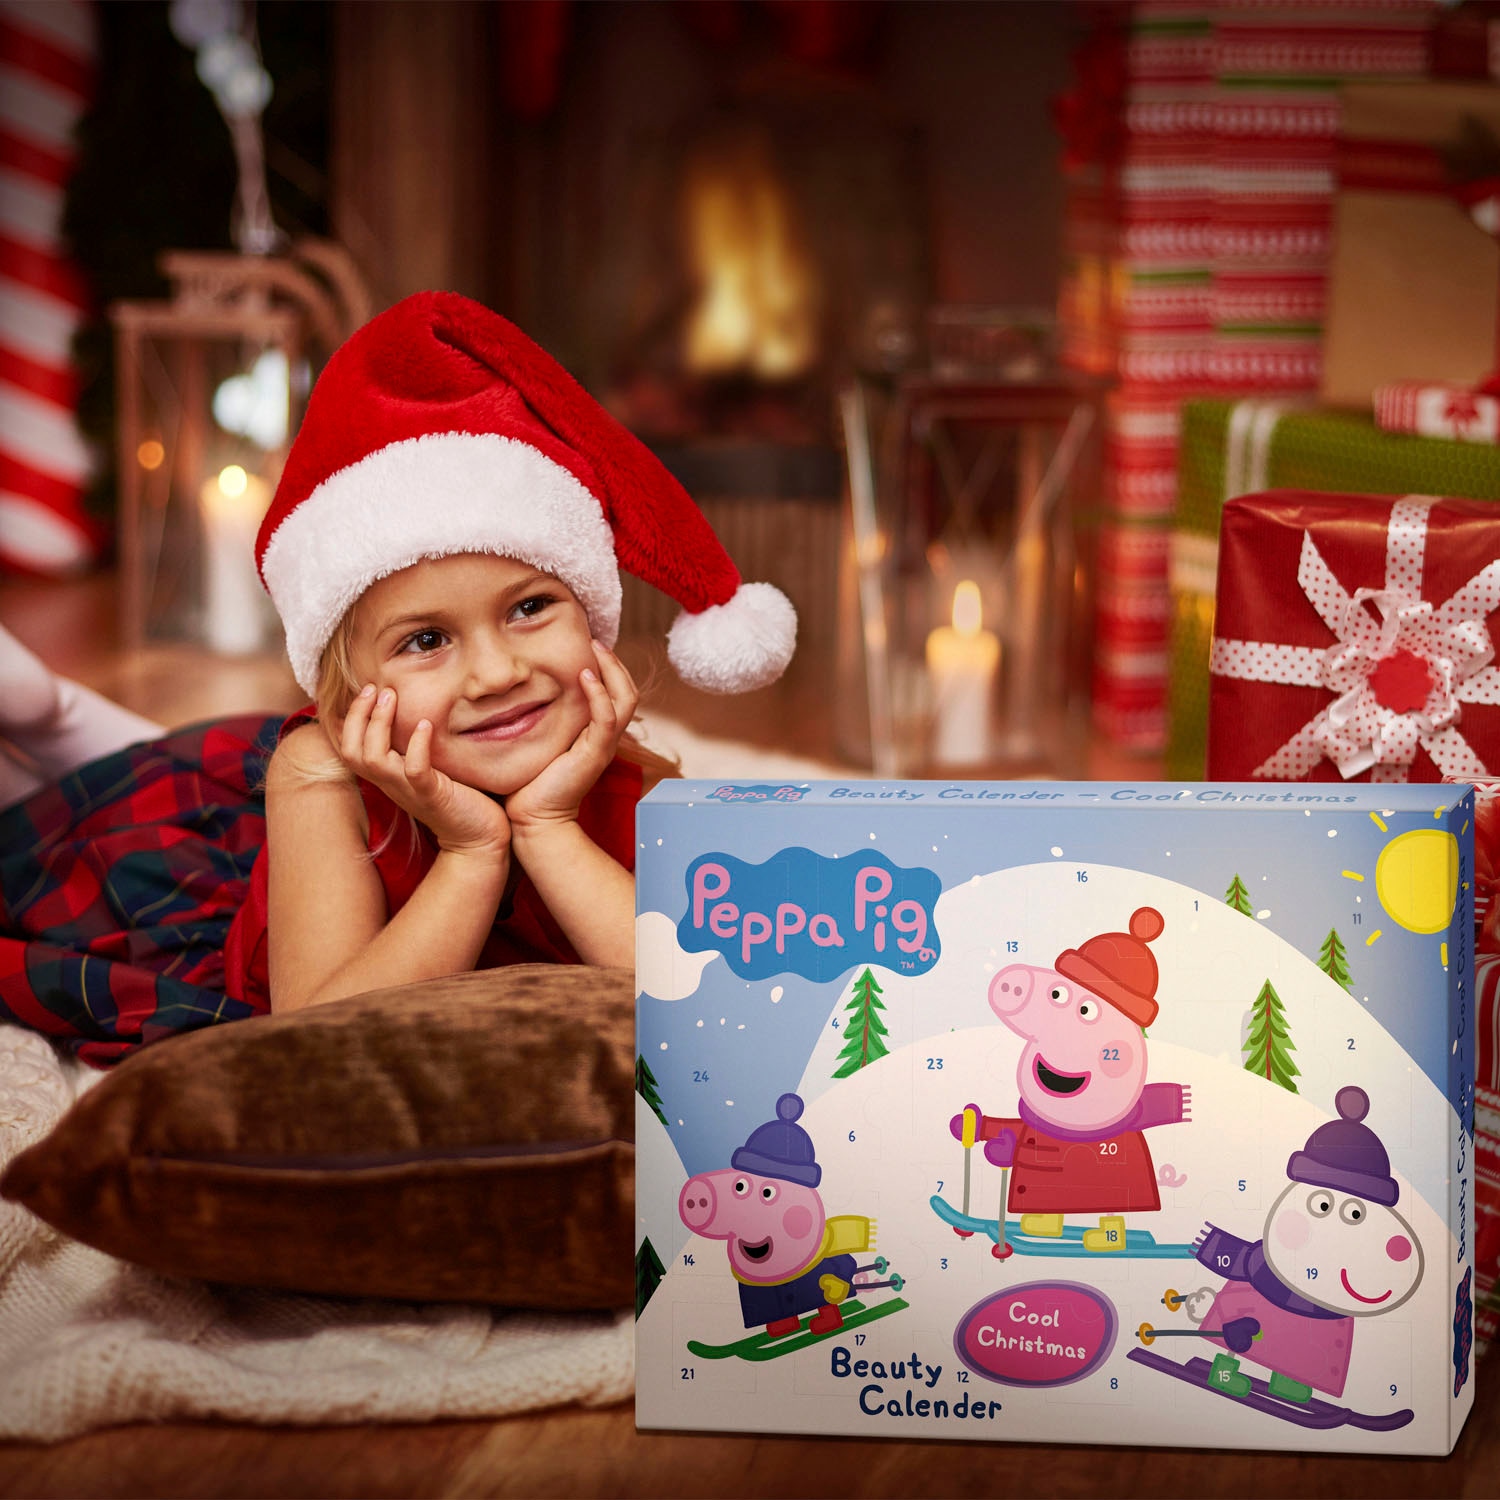 Peppa Pig Jahren Pig Bath & Christmas\'«, \'Cool | ab BAUR Fun 6 Adventskalender »Peppa Calendar